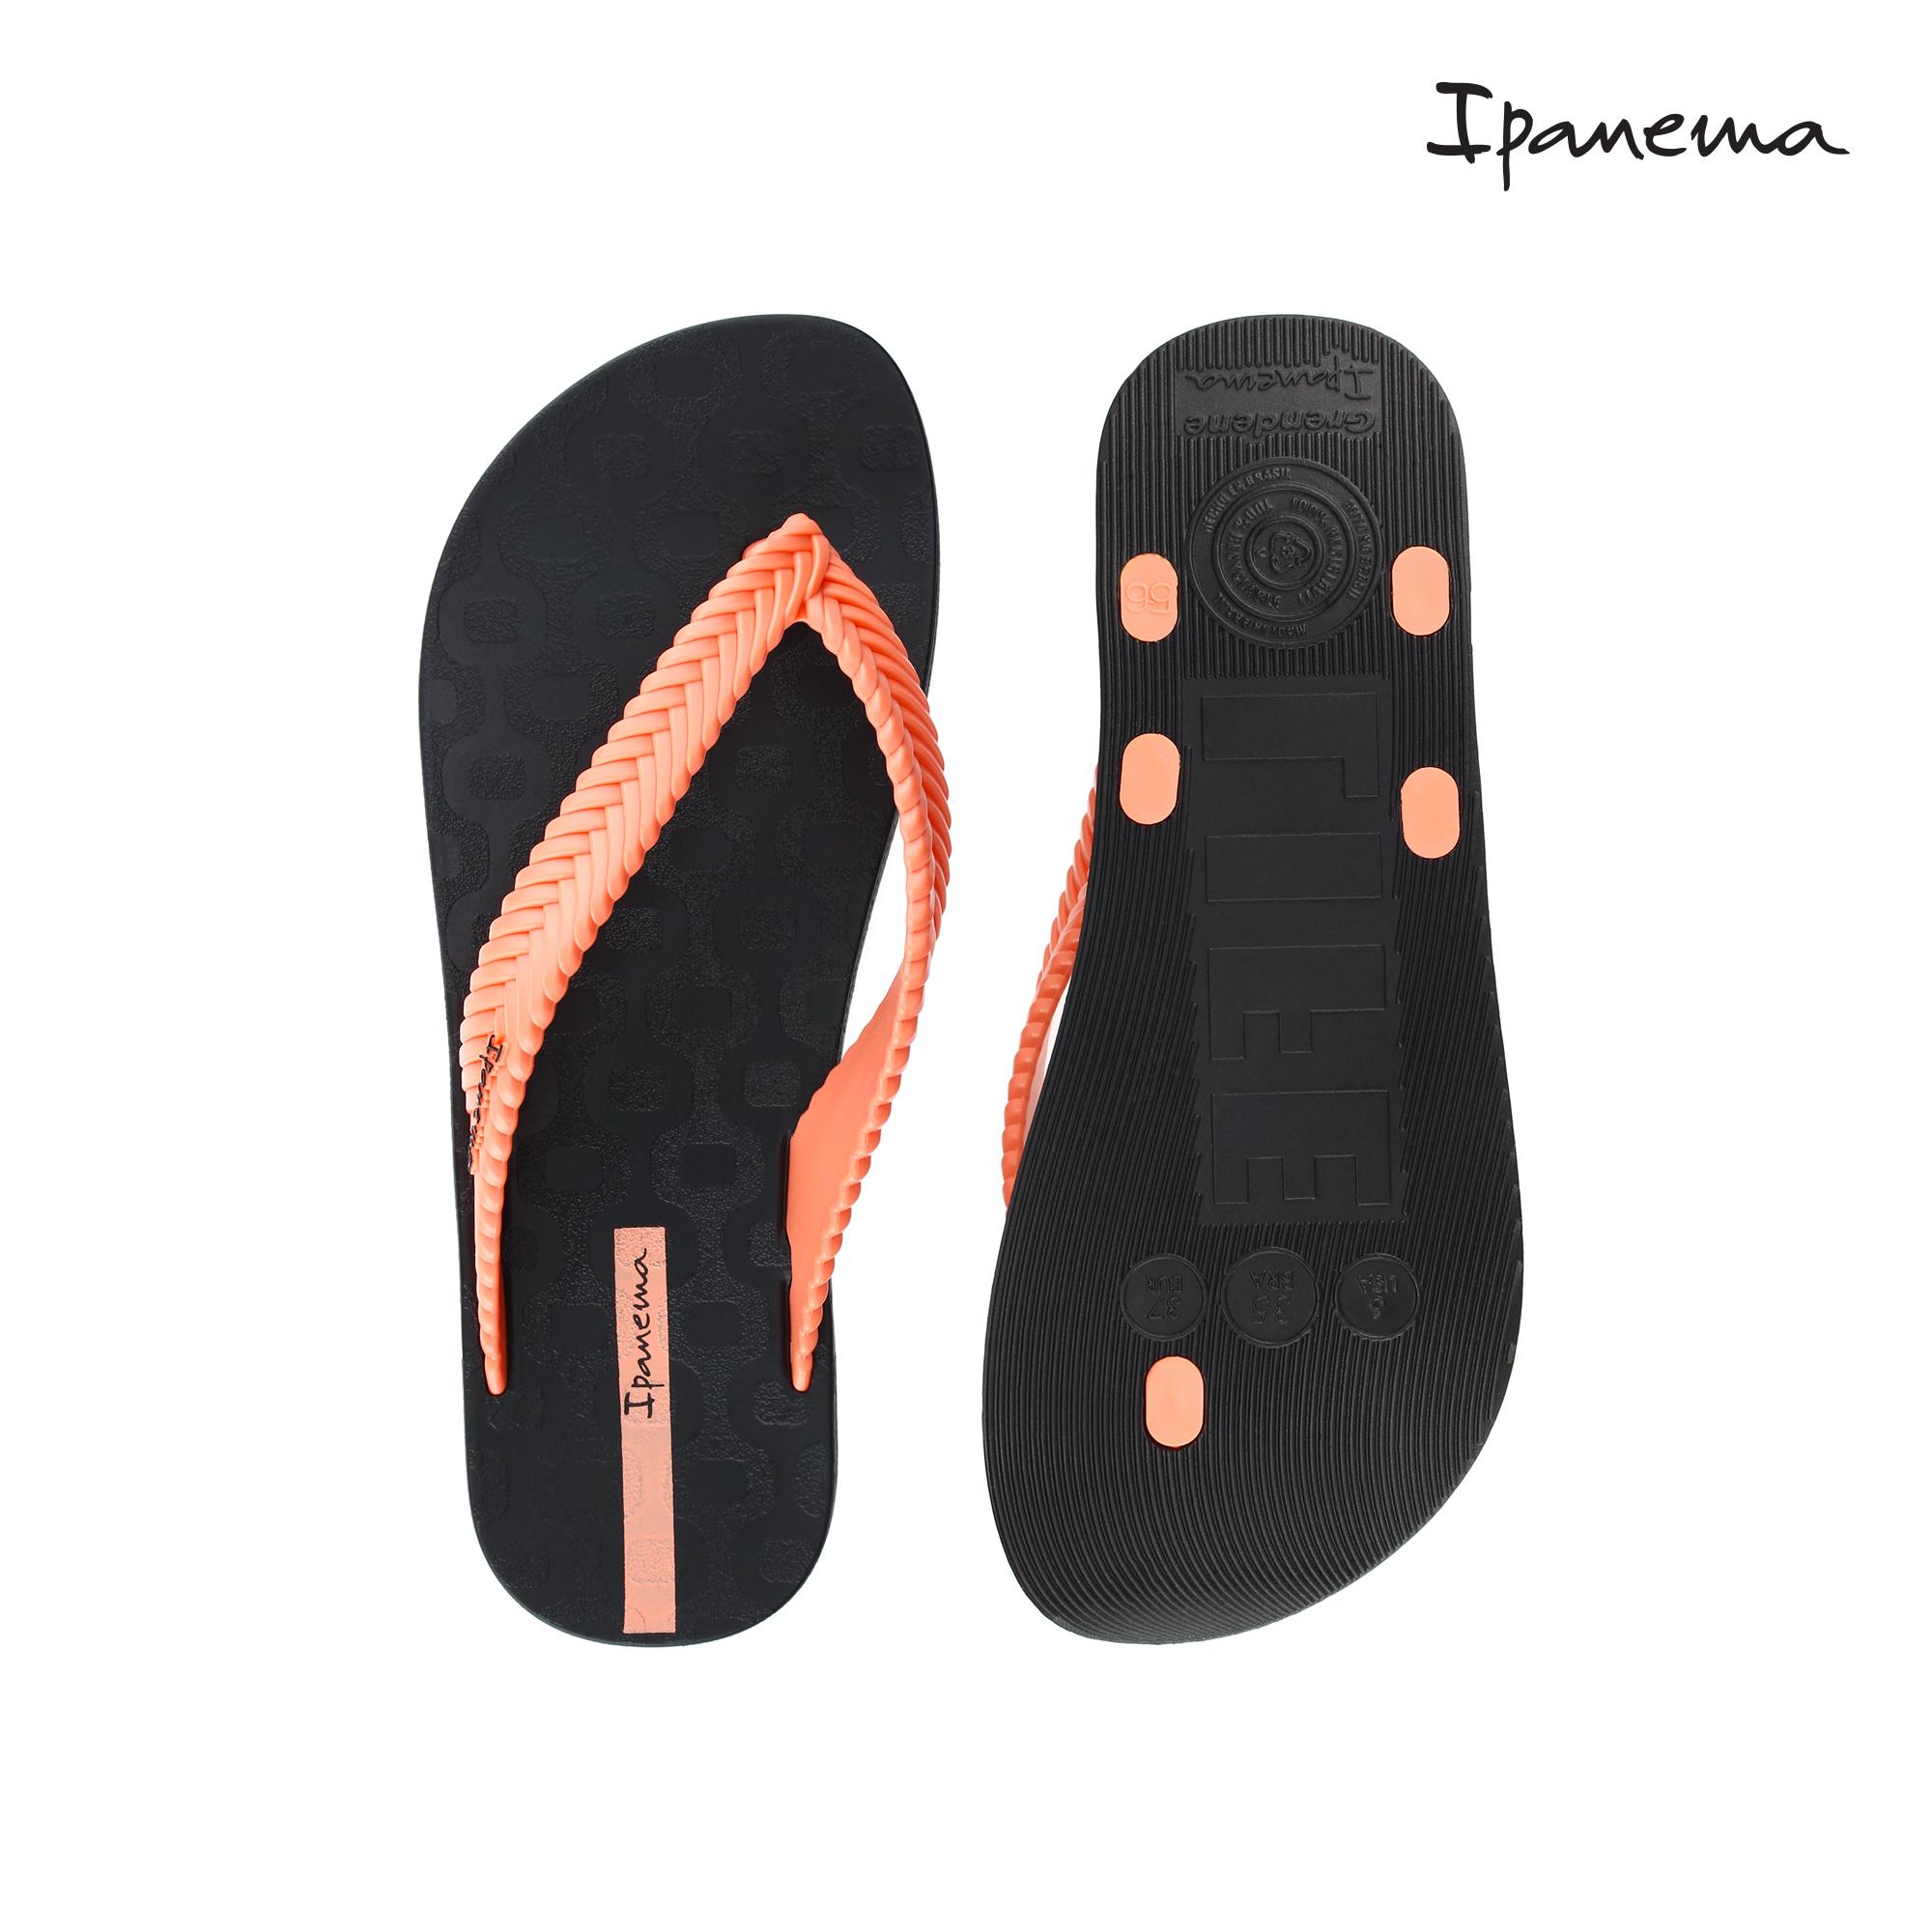 ipanema shoes 2019